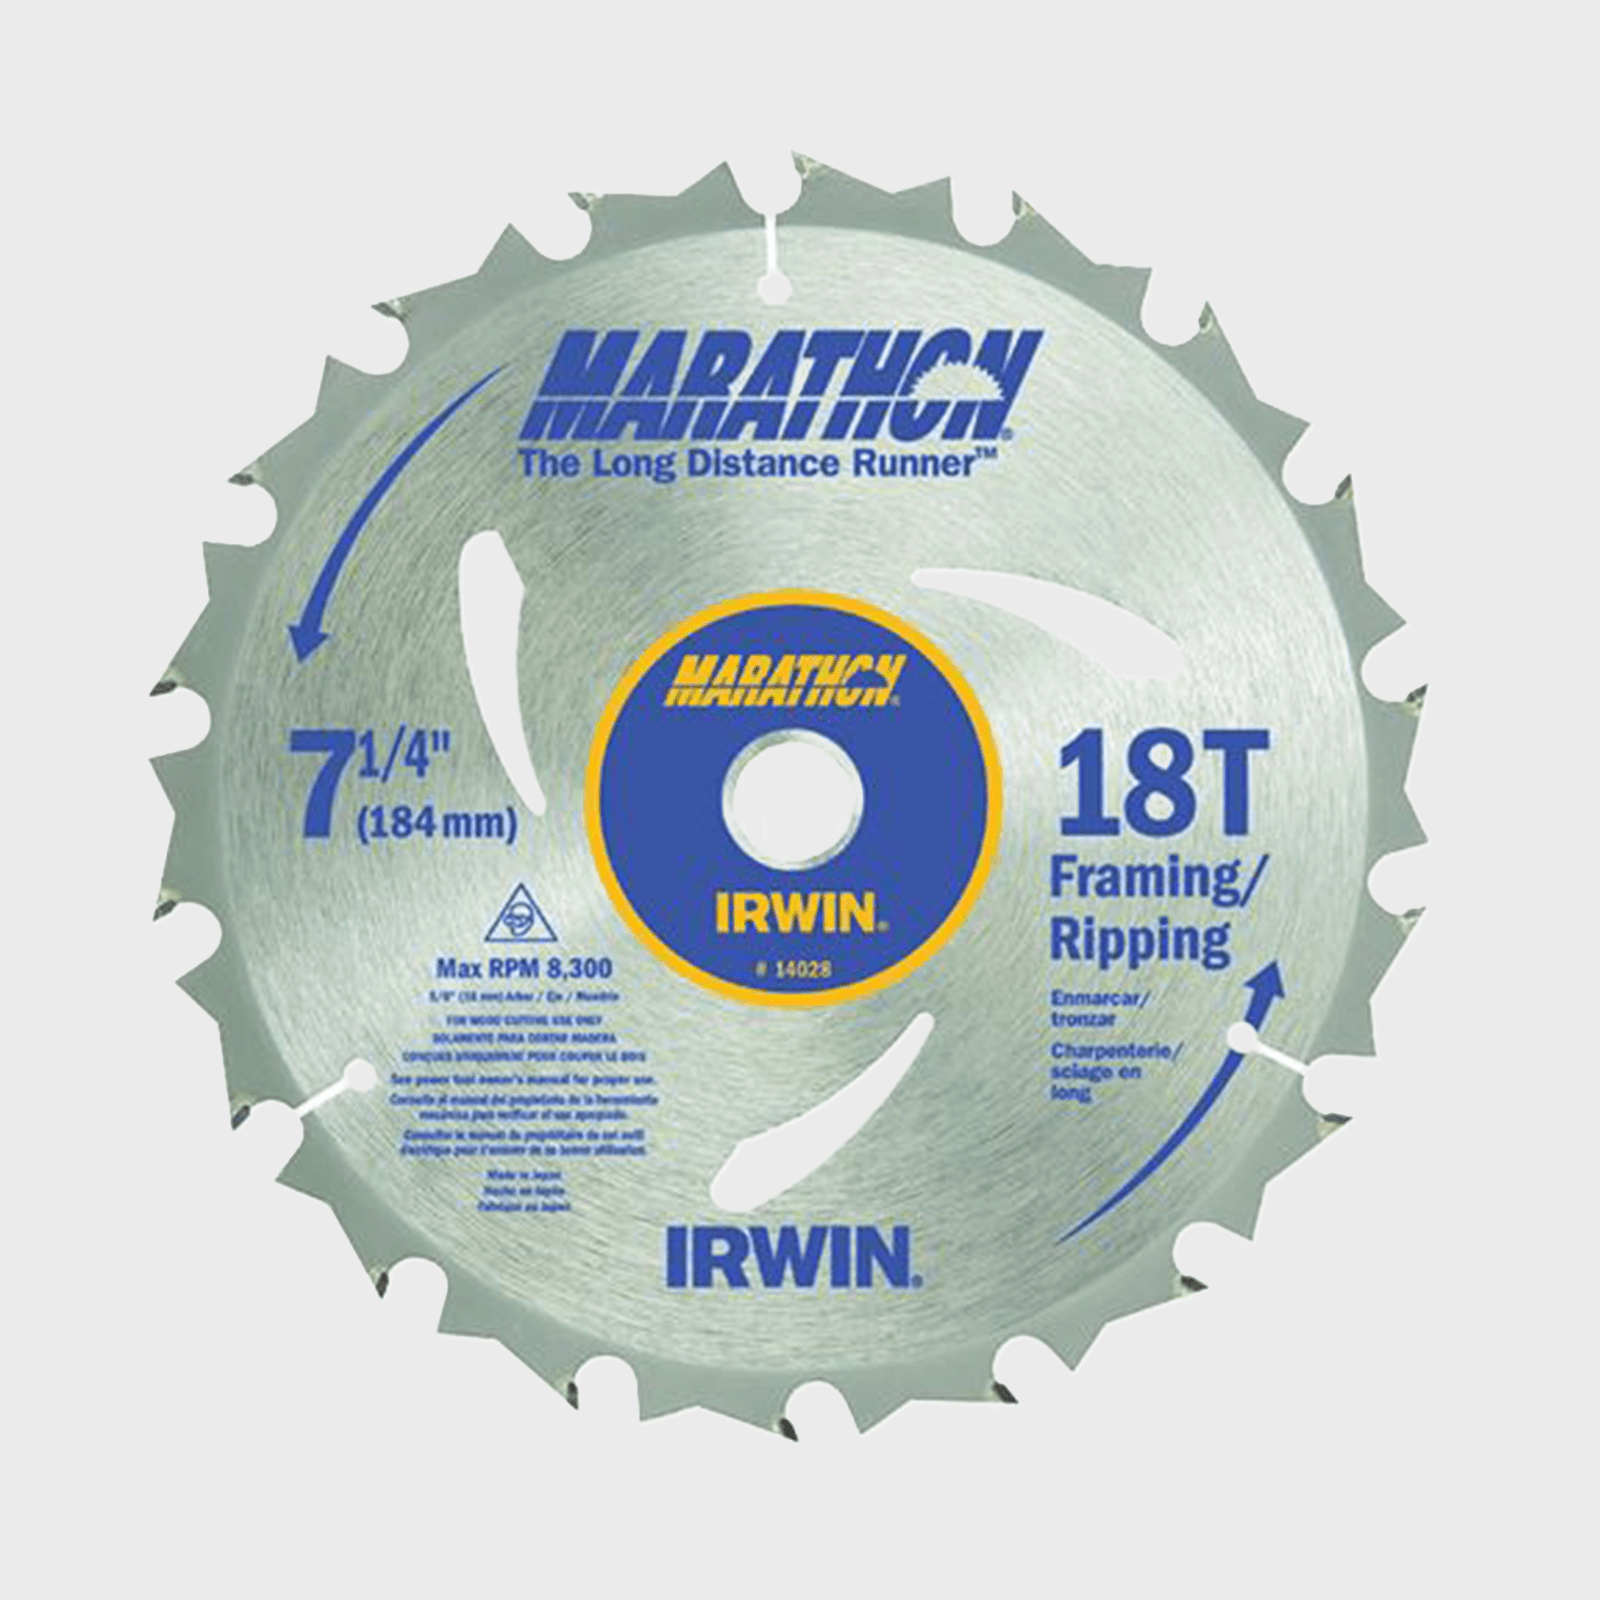 Irwin Marathon Circular Saw Blade, 18 T, 5.5